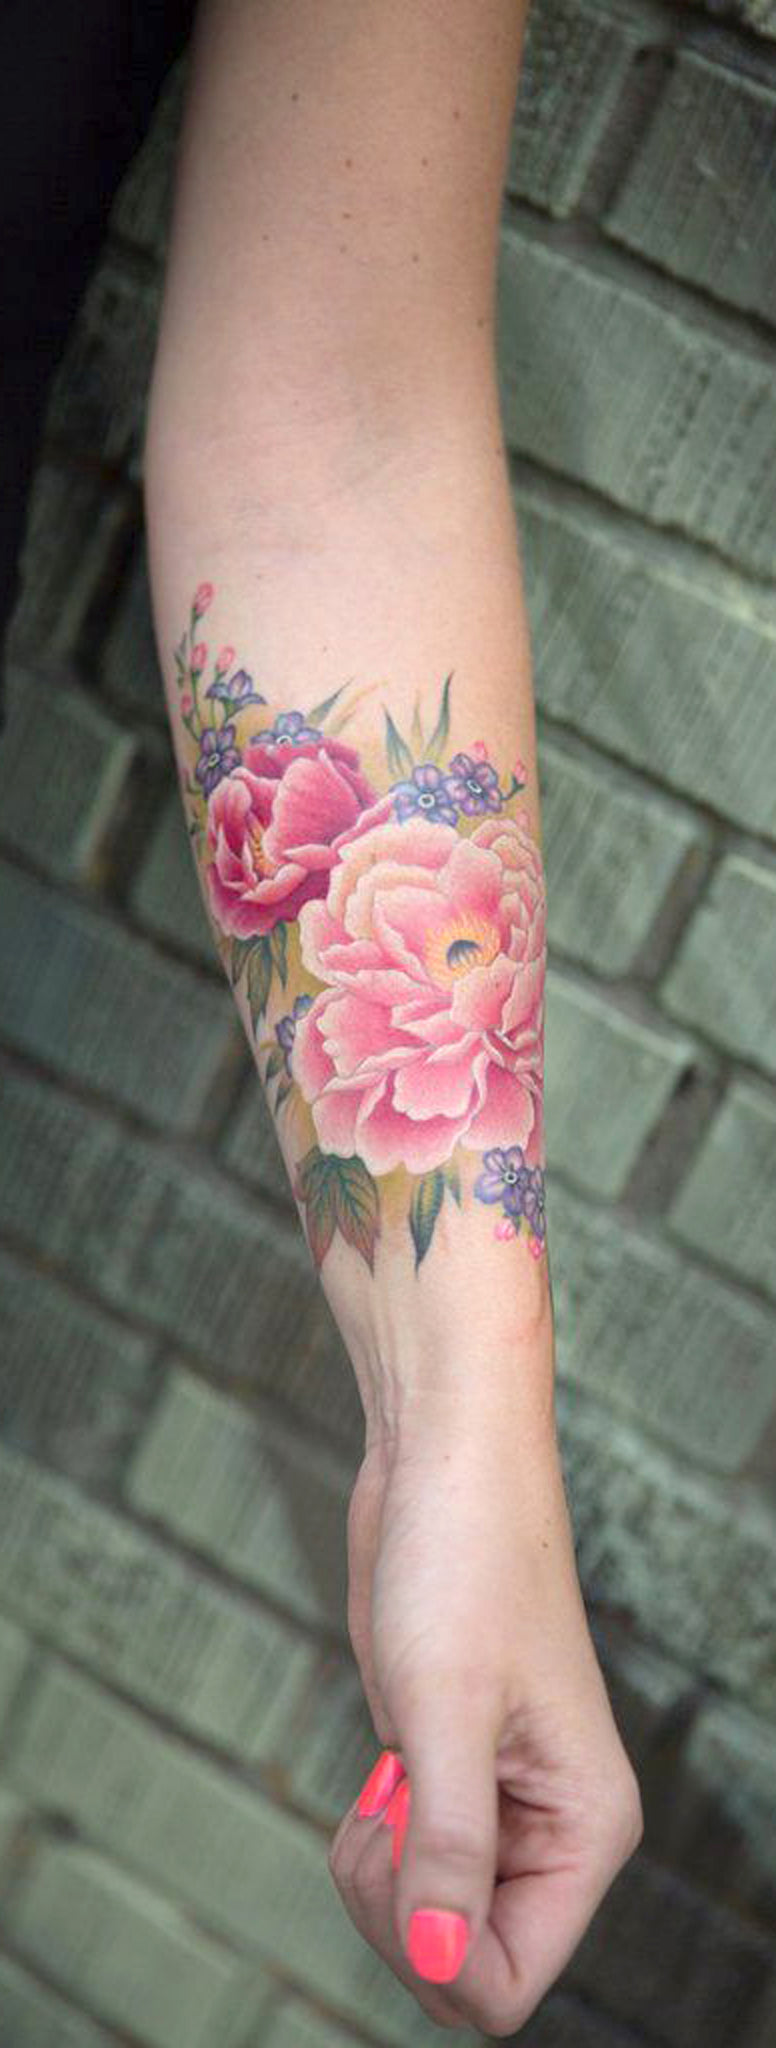 Colorful Watercolor Flower Forearm Tattoo Ideas for Women - Pink Realistic Floral Arm Sleeve Tat -  ideas del tatuaje del antebrazo de la flor de la acuarela para las mujeres chicas - www.MyBodiArt.com